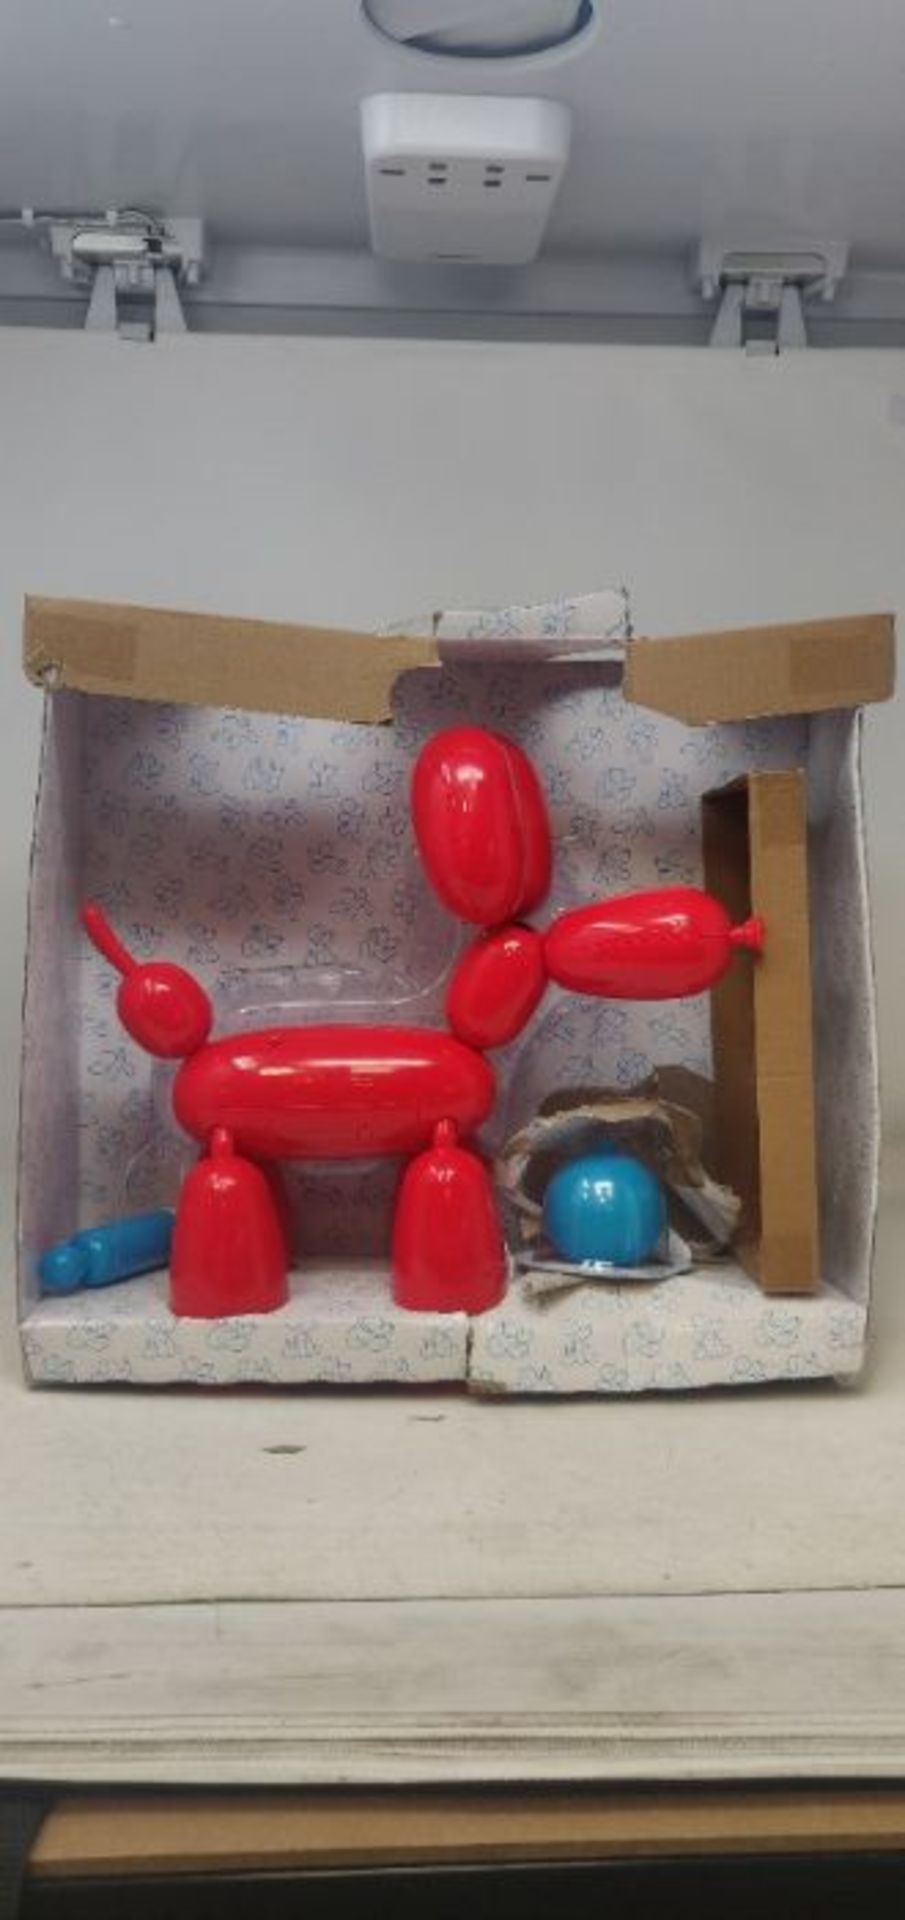 Squeakee 12300 Interactive Balloon Dog - Image 3 of 6